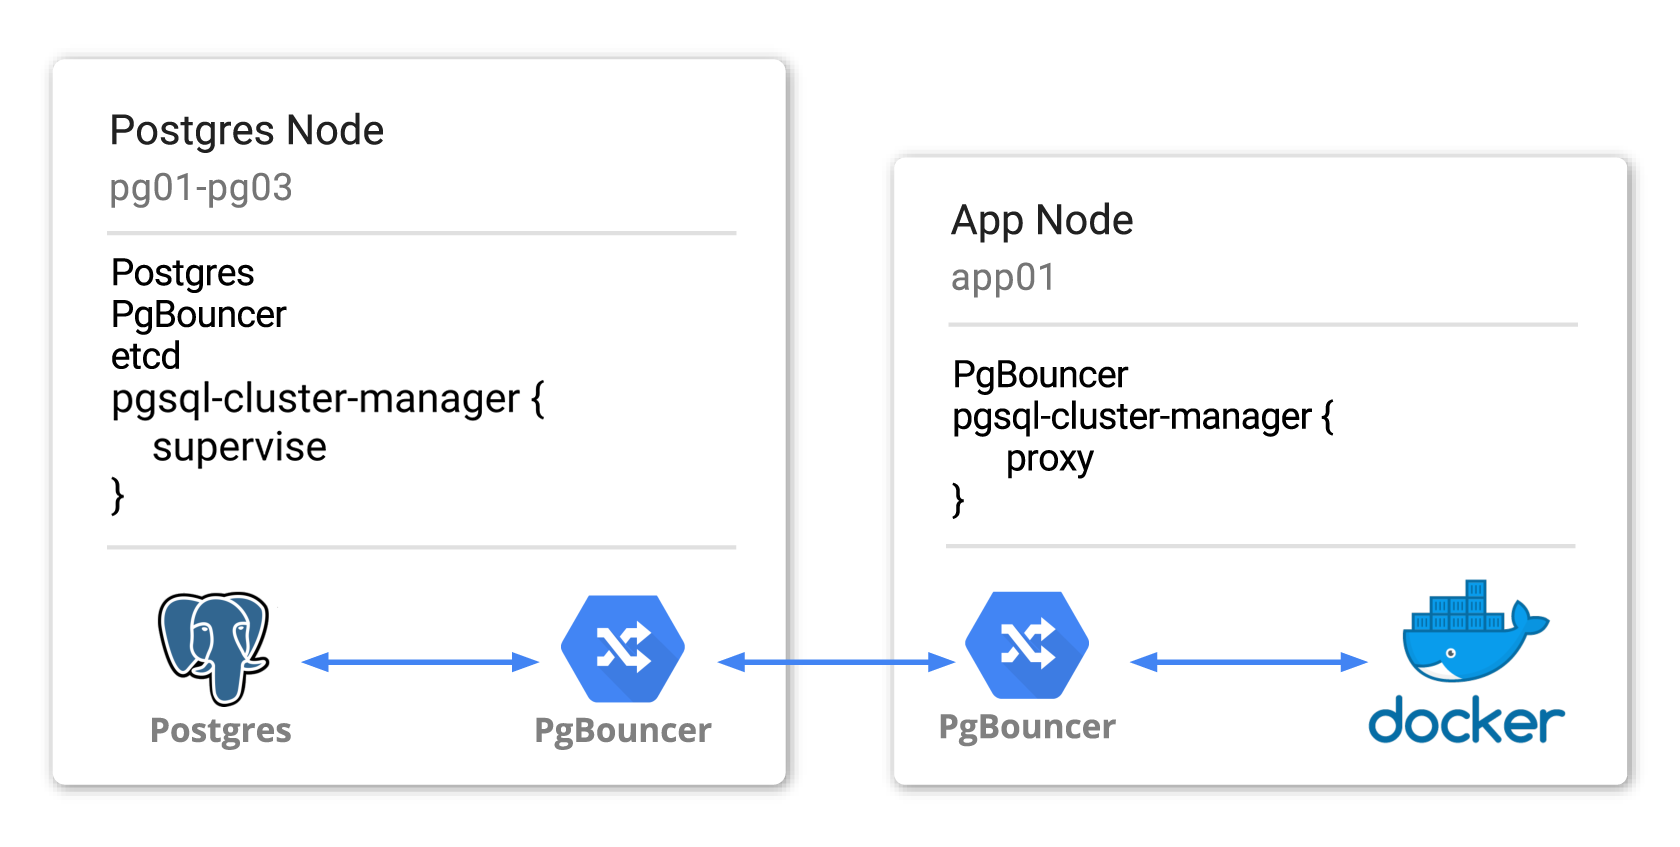 Two node types, Postgres and App machines